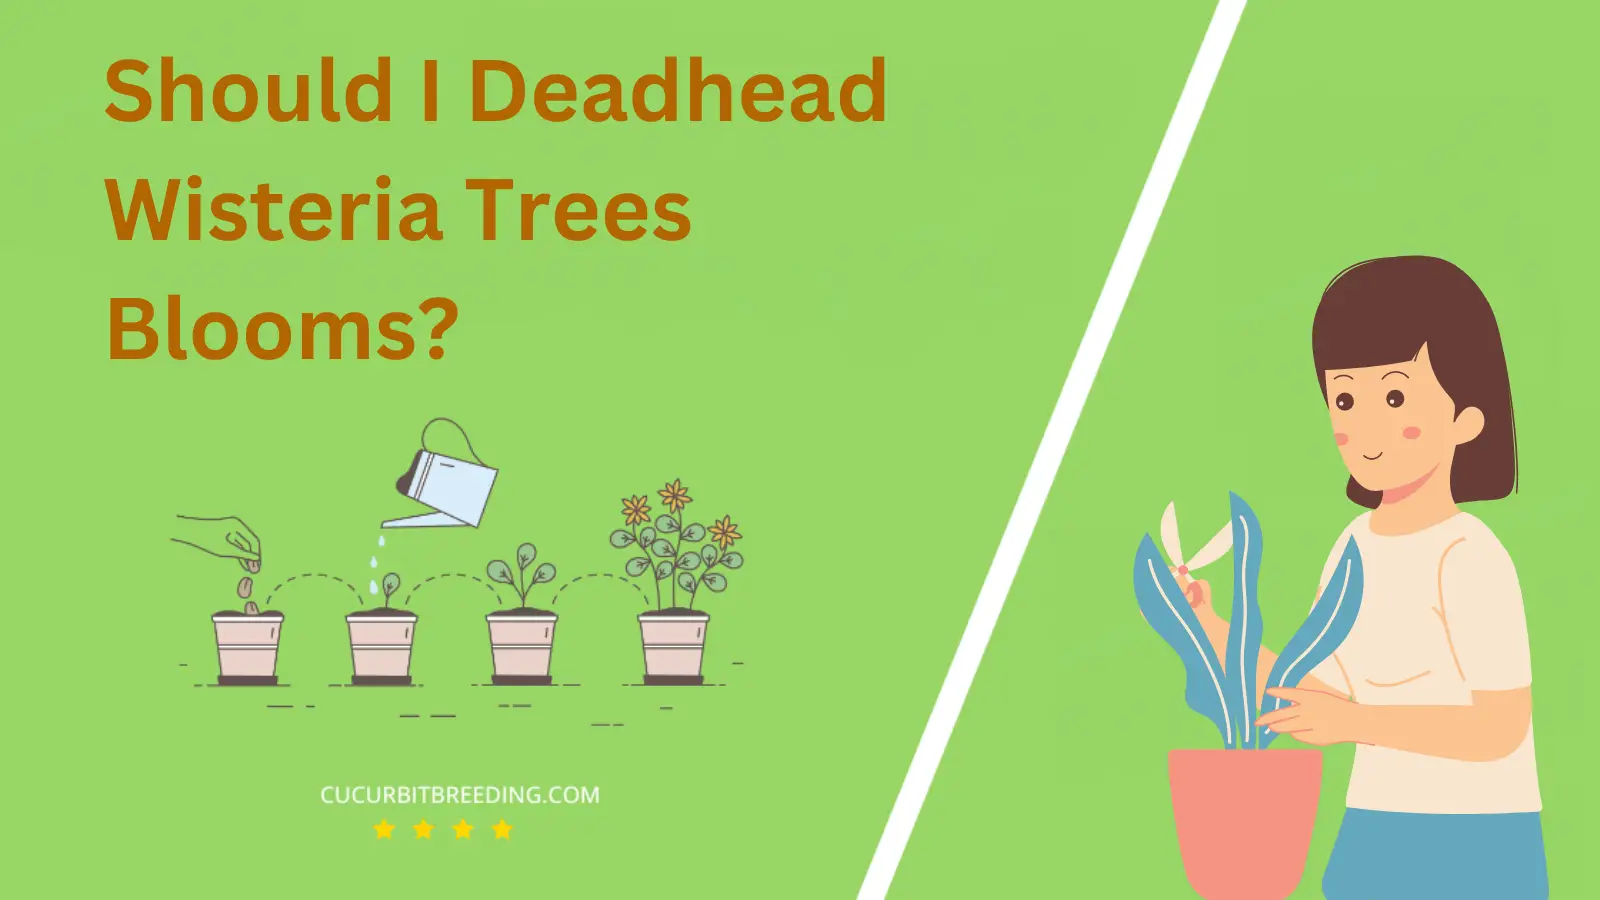 Should I Deadhead Wisteria Trees Blooms?